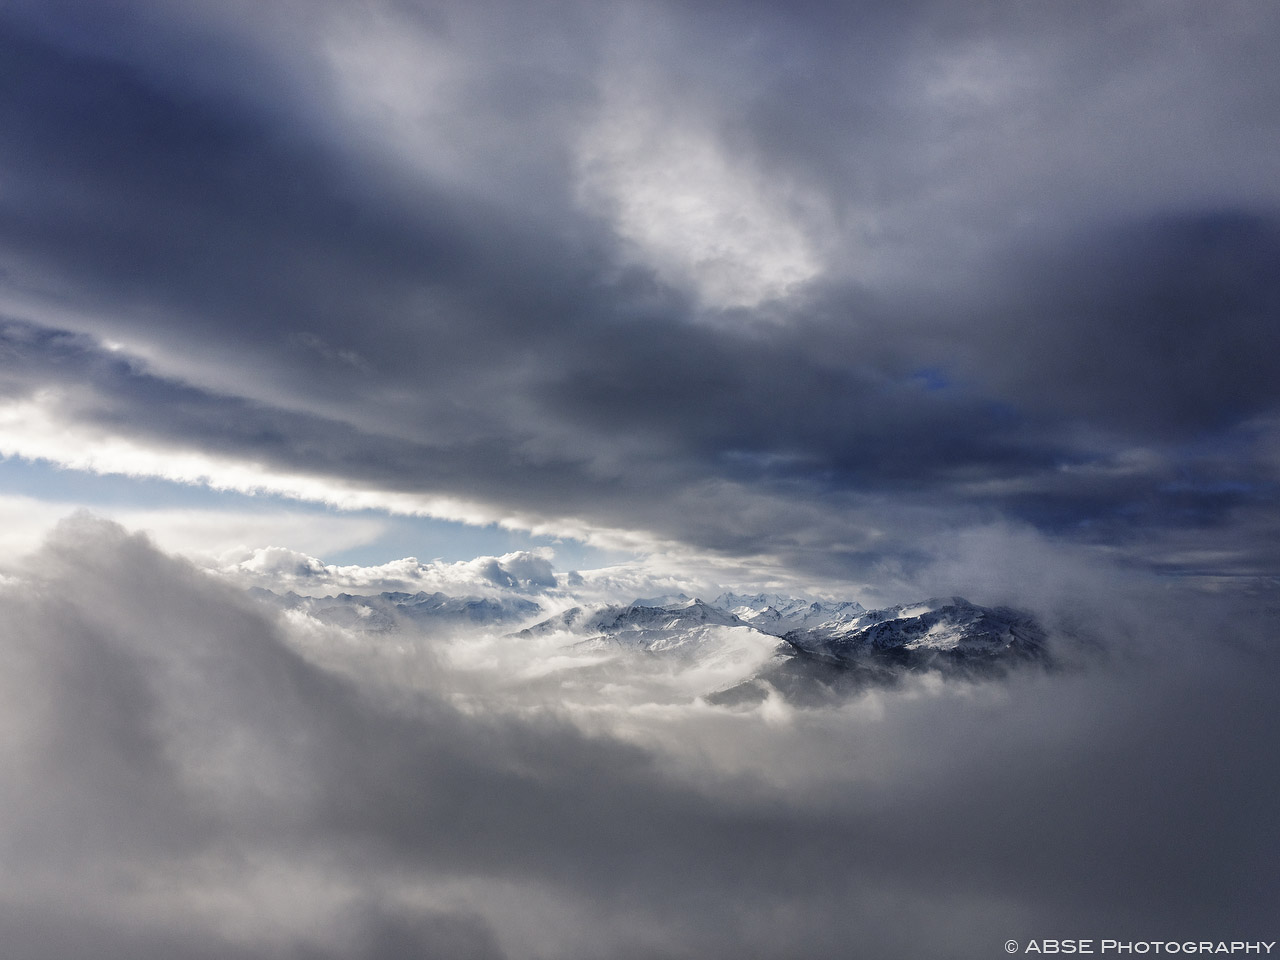 http://blog.absephotography.com/wp-content/uploads/2016/01/soll-austria-mountains-clouds-lights-weather-2.jpg